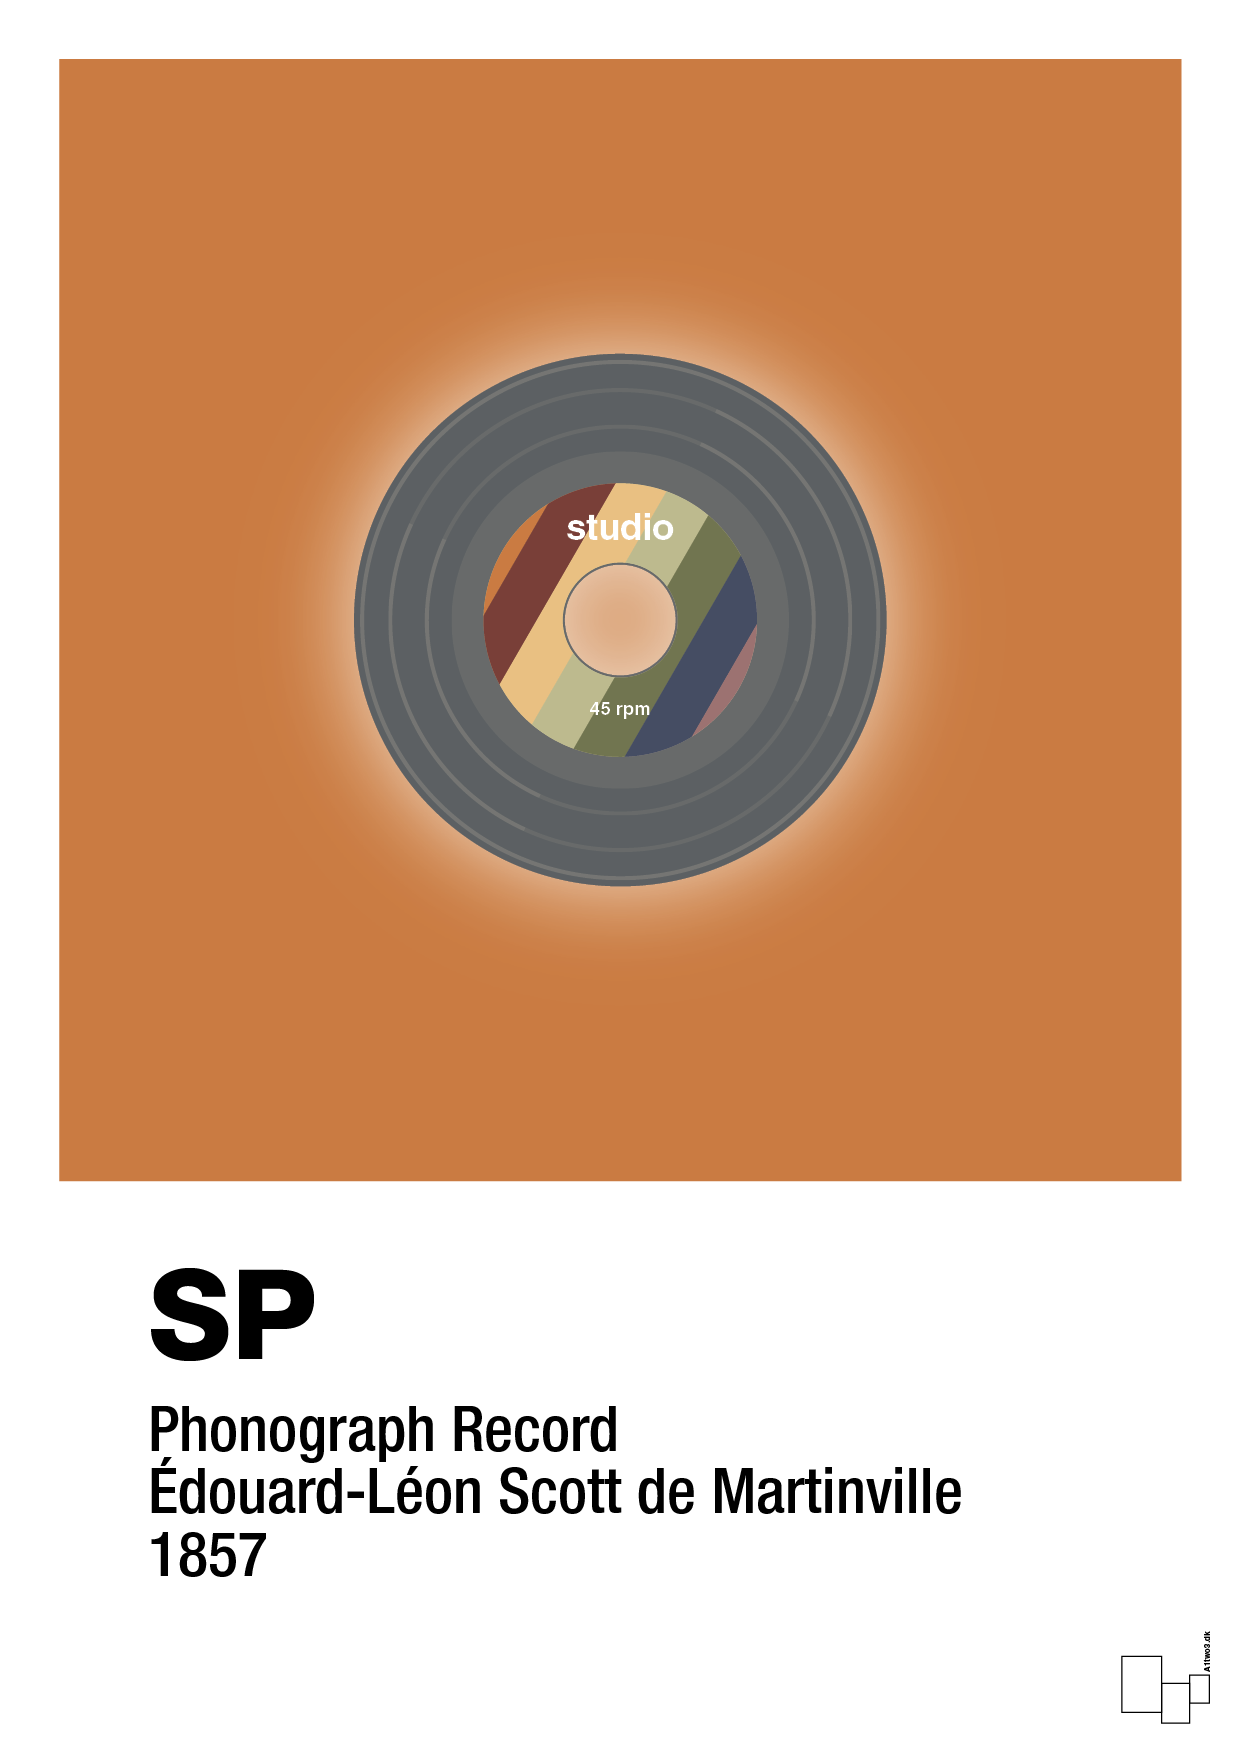 vinylplade 45rpm - Plakat med Grafik i Rumba Orange